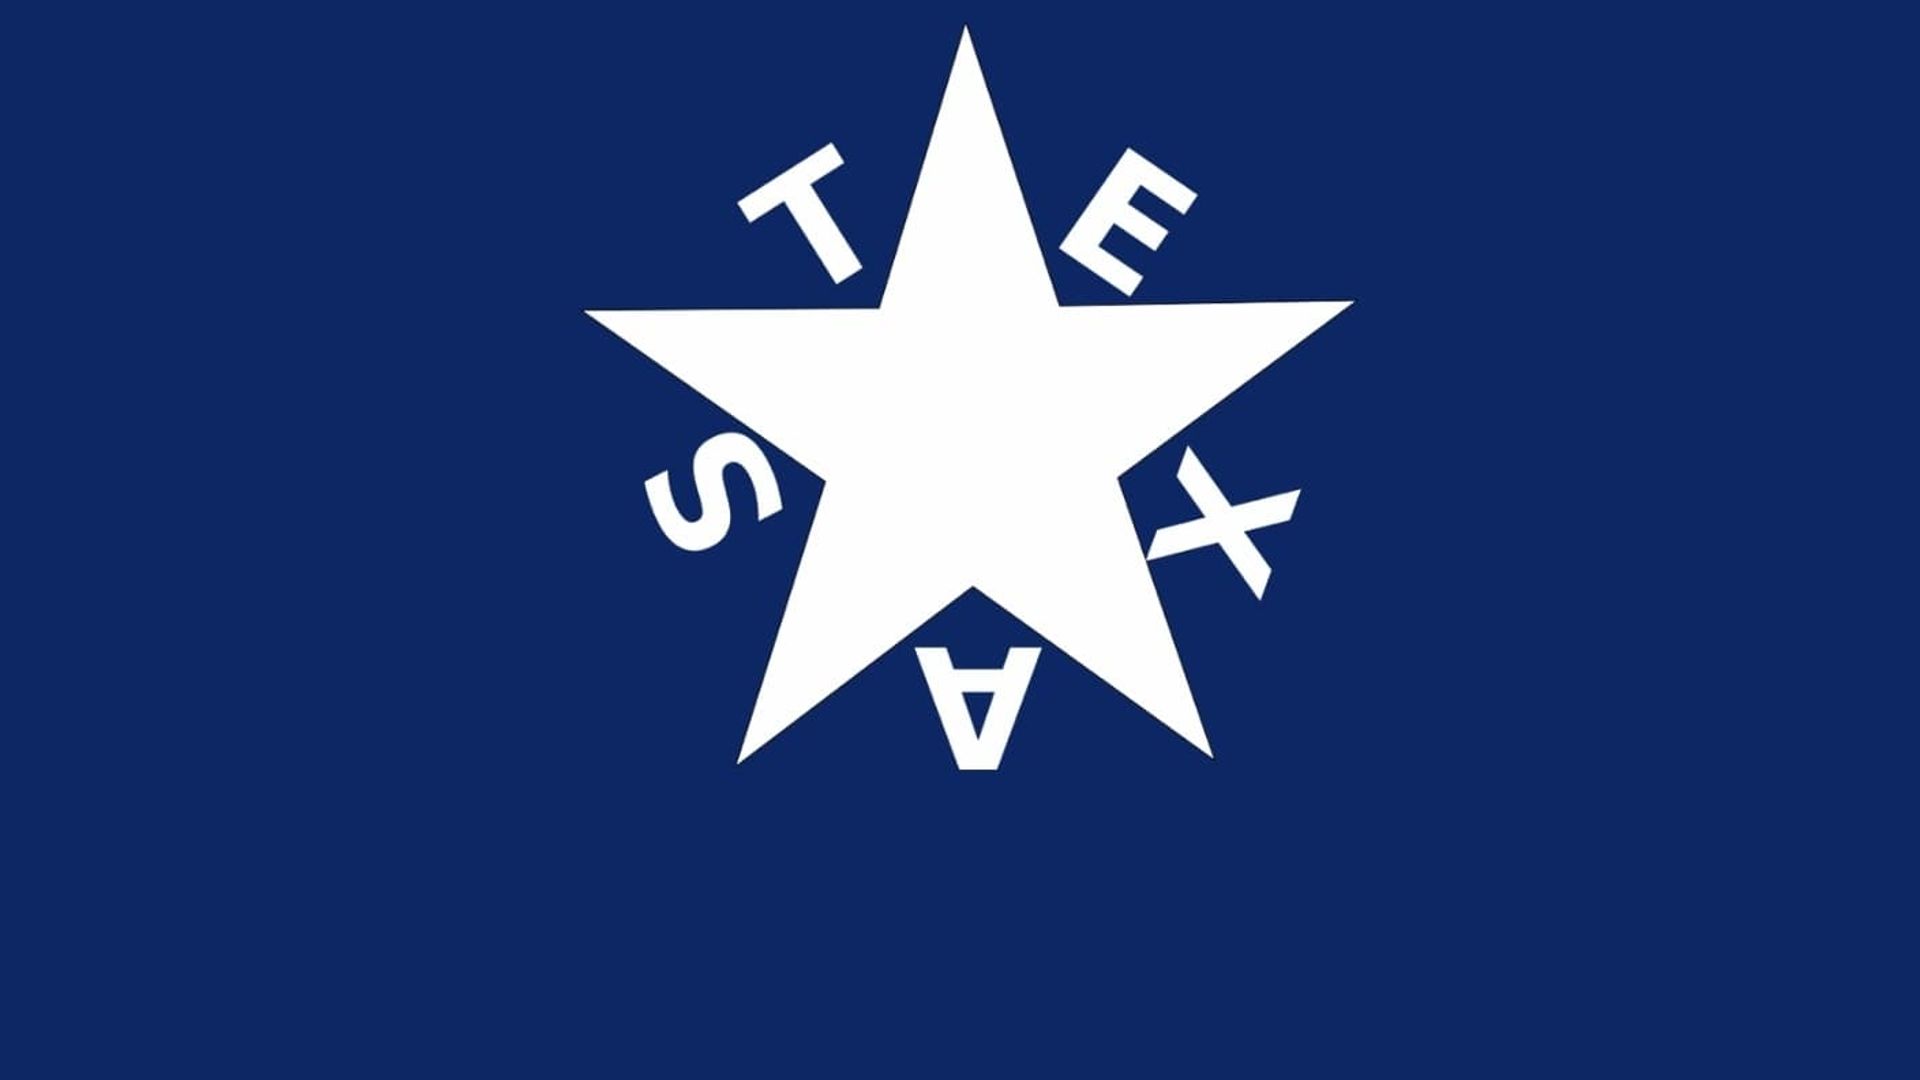 Texas background